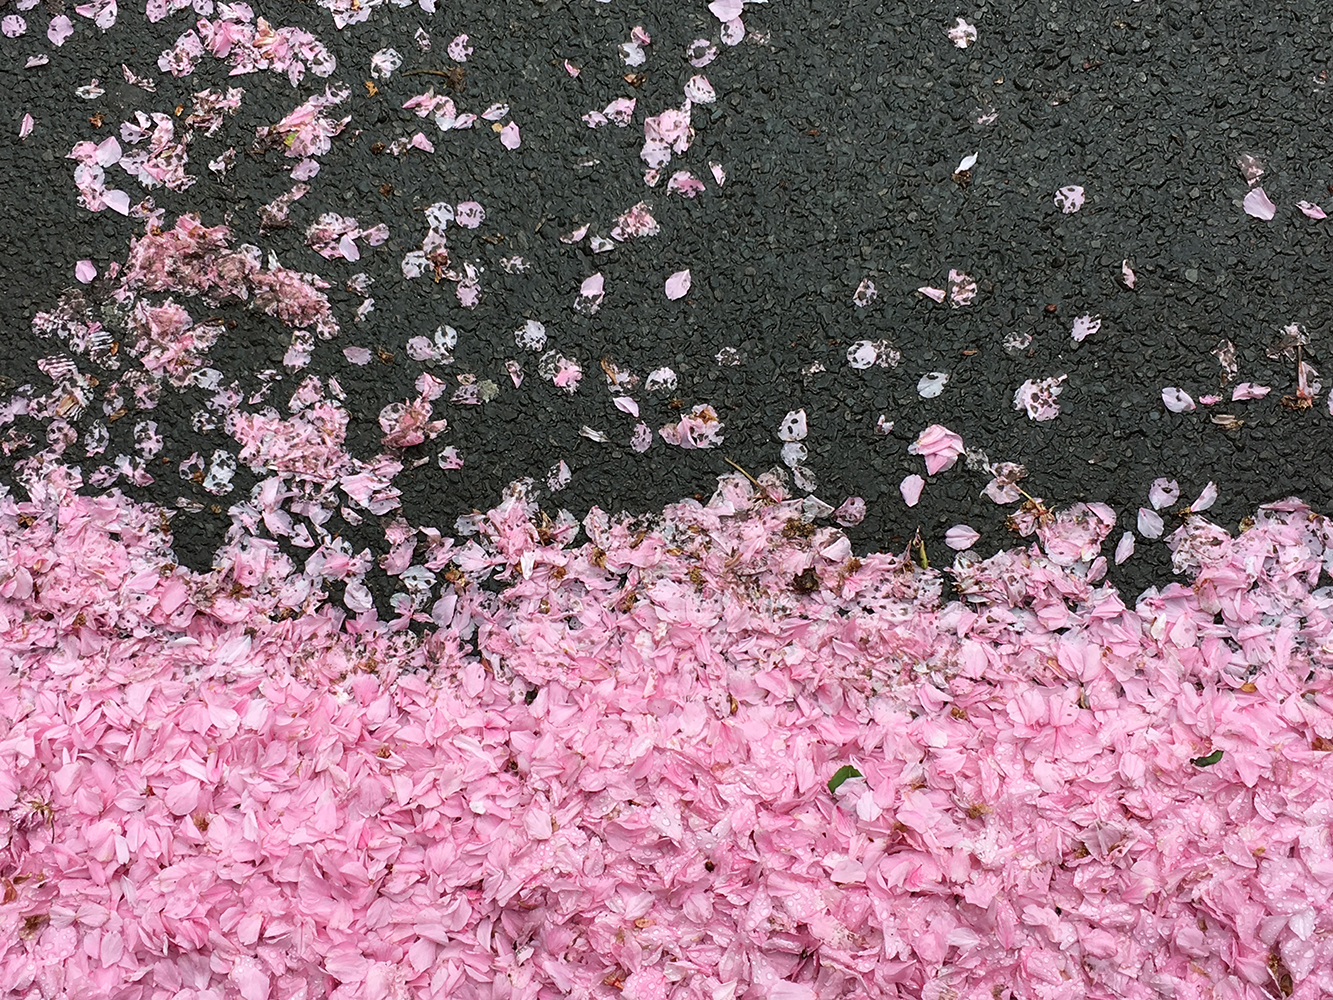 Lucile Bertrand - Fallen petals